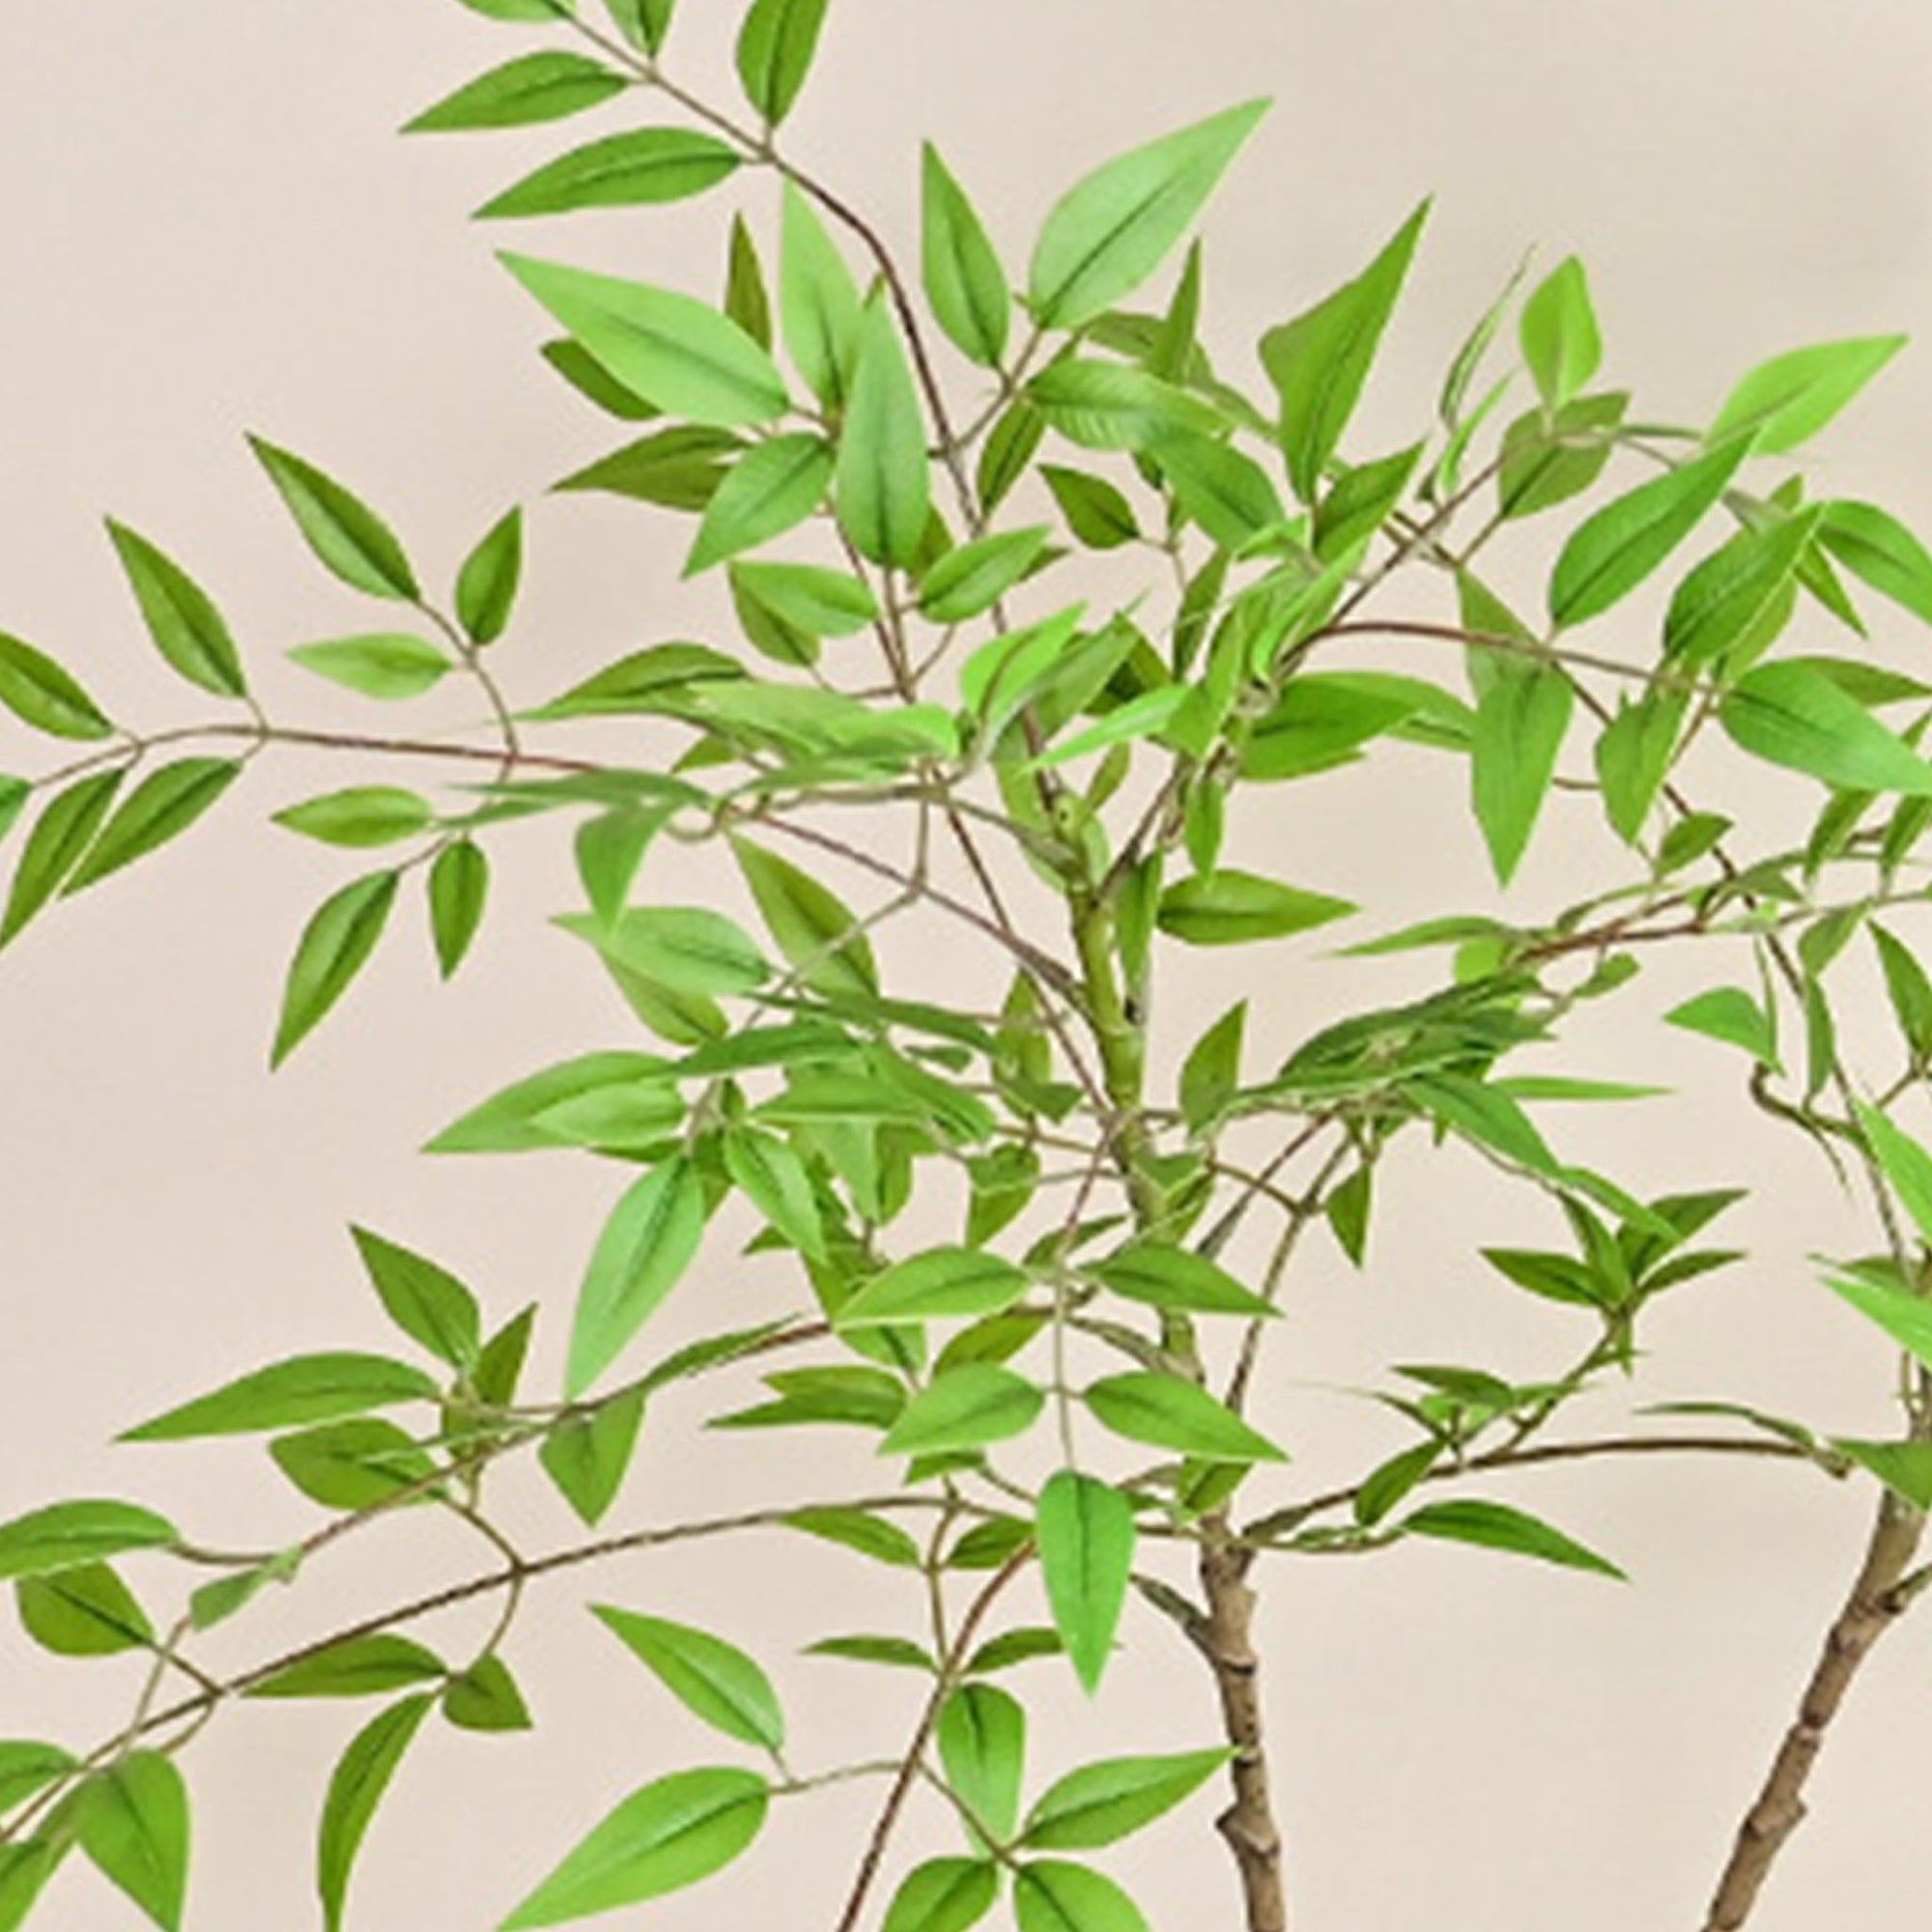 Artificial Nandina Leaf Branch Tall Plants Home Decor 35"